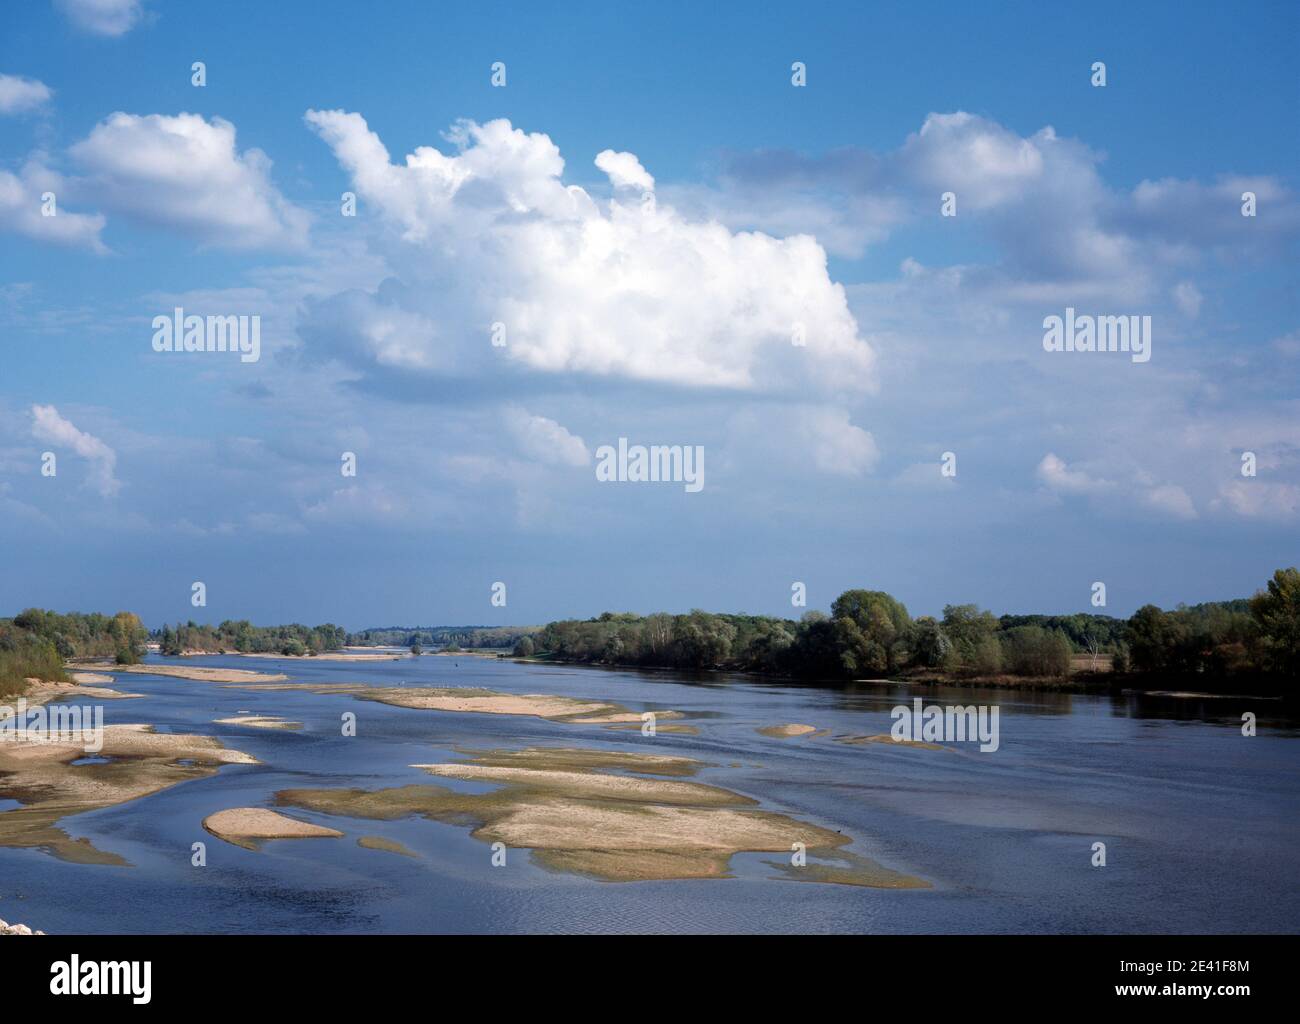 Unbegradigter Fluß mit Sandbank Stock Photo